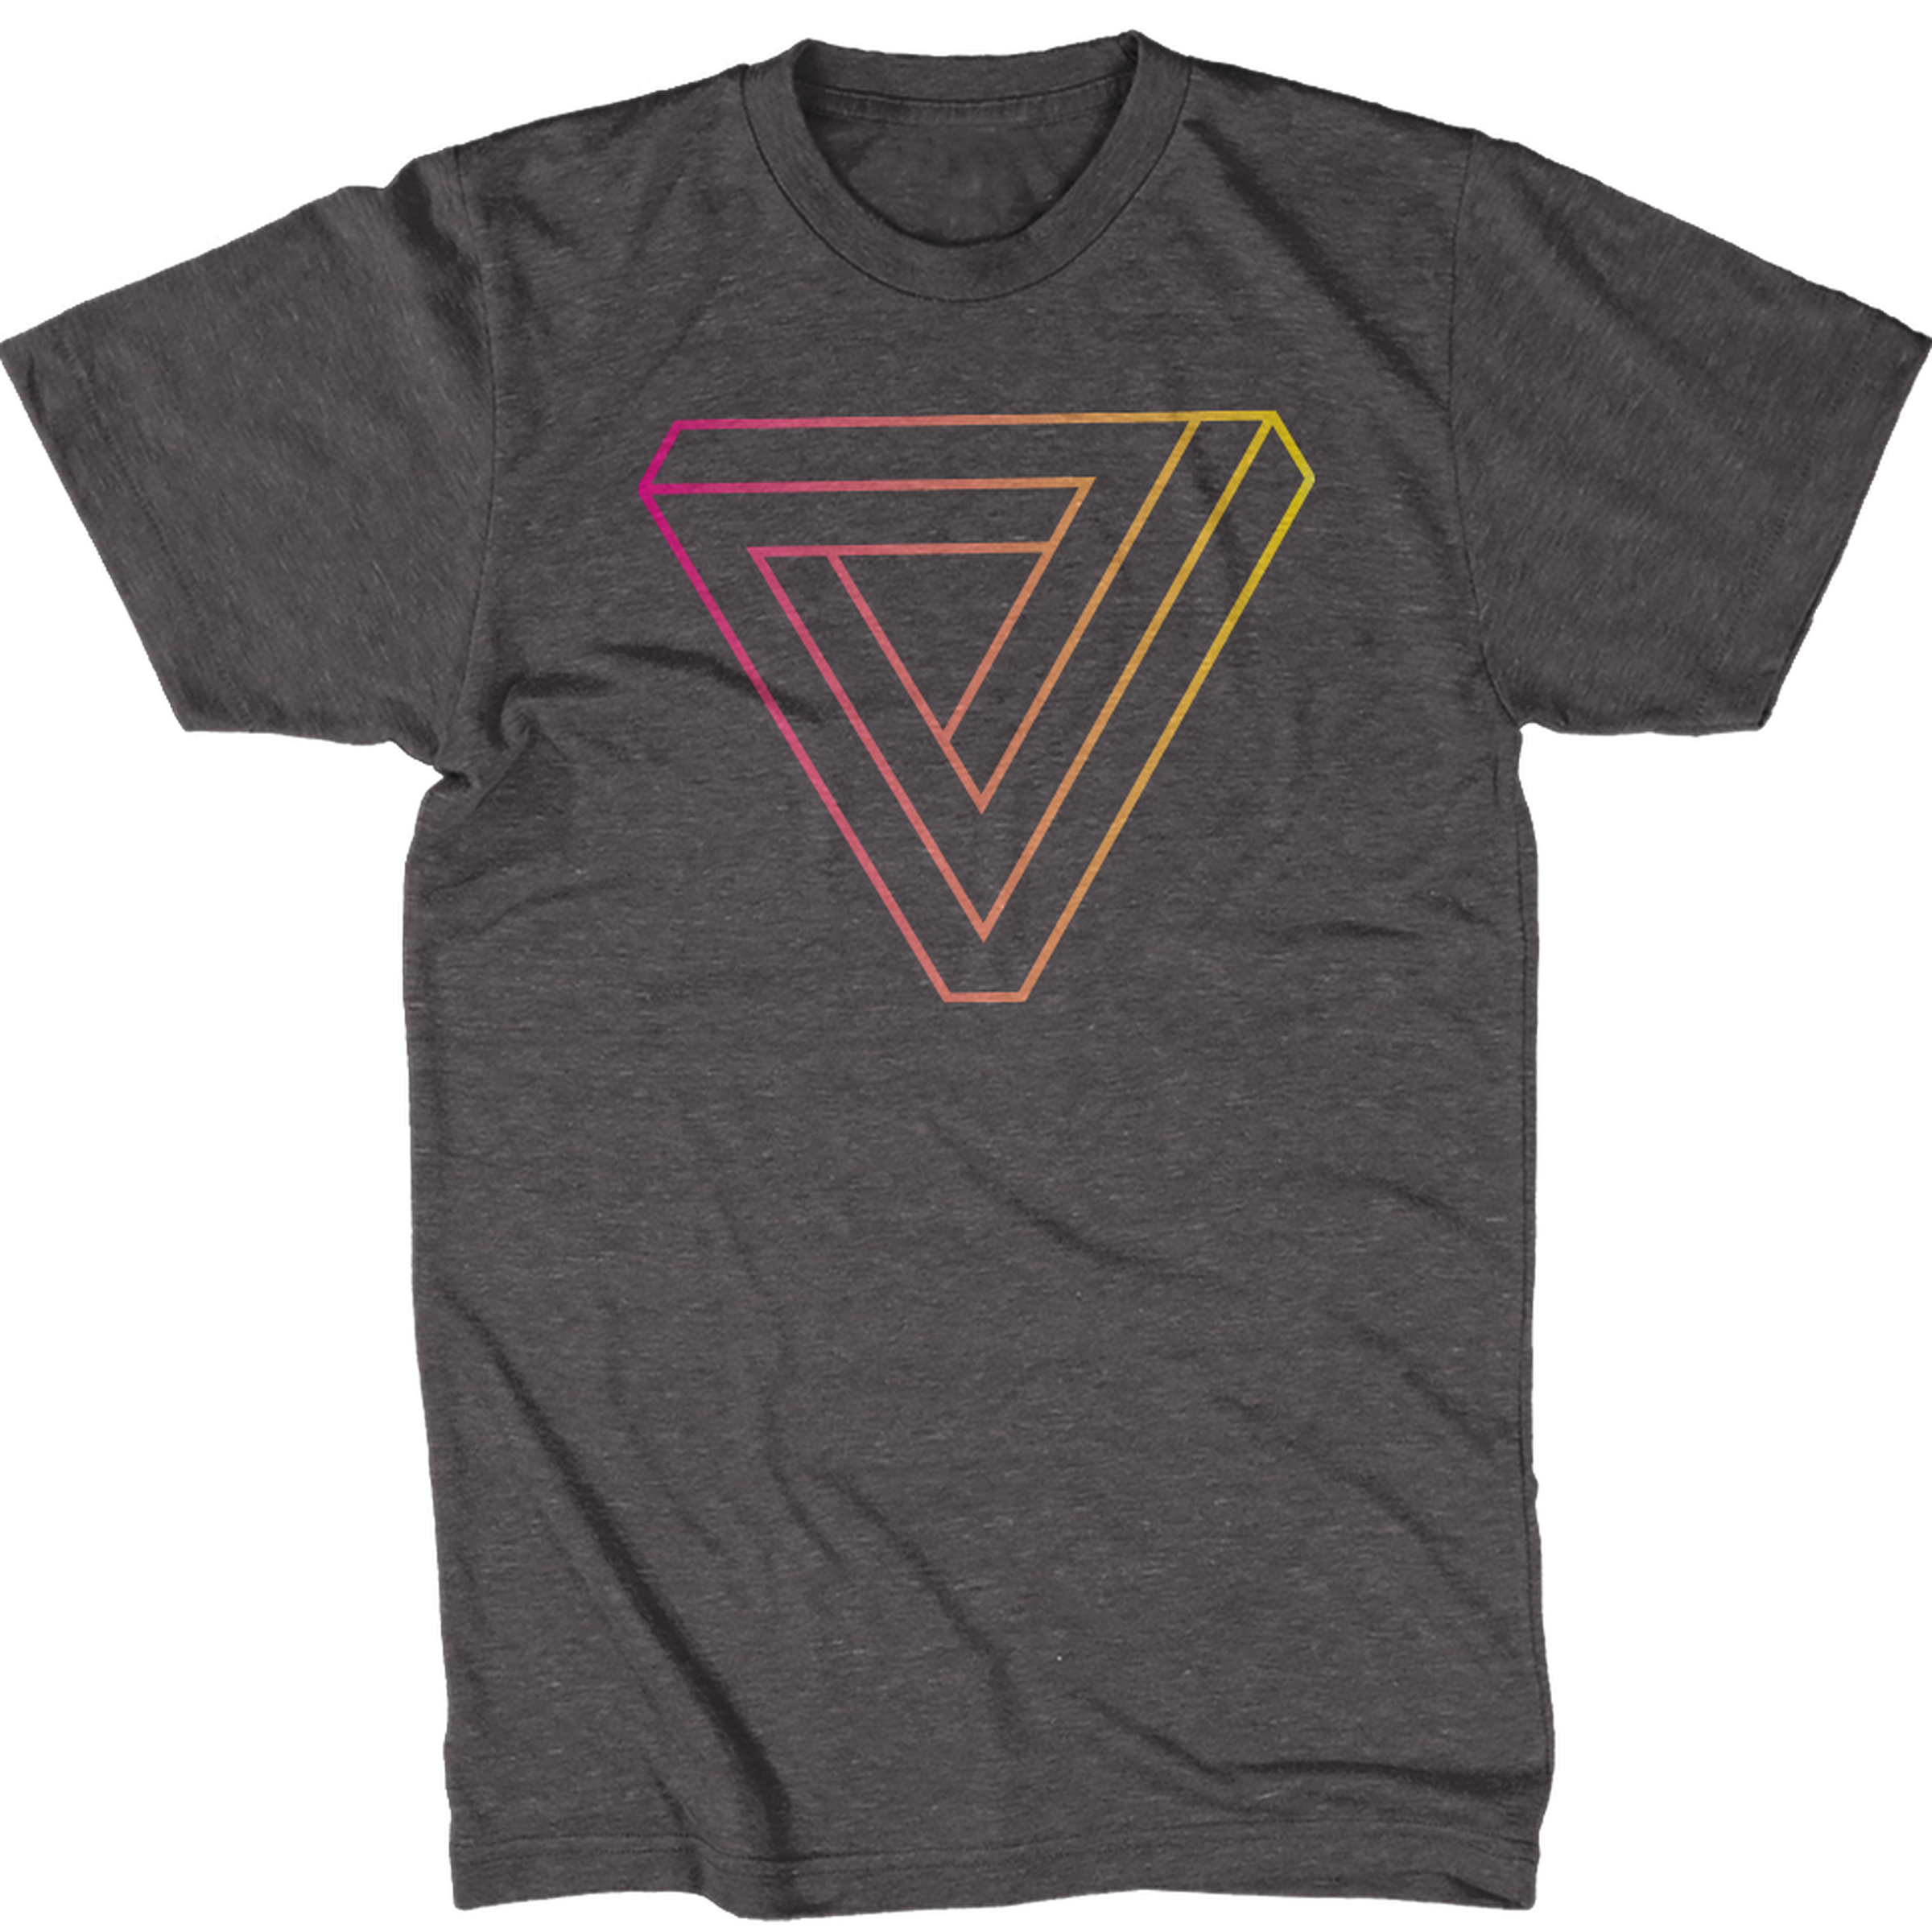 Verge wireframe logomark T-shirt.